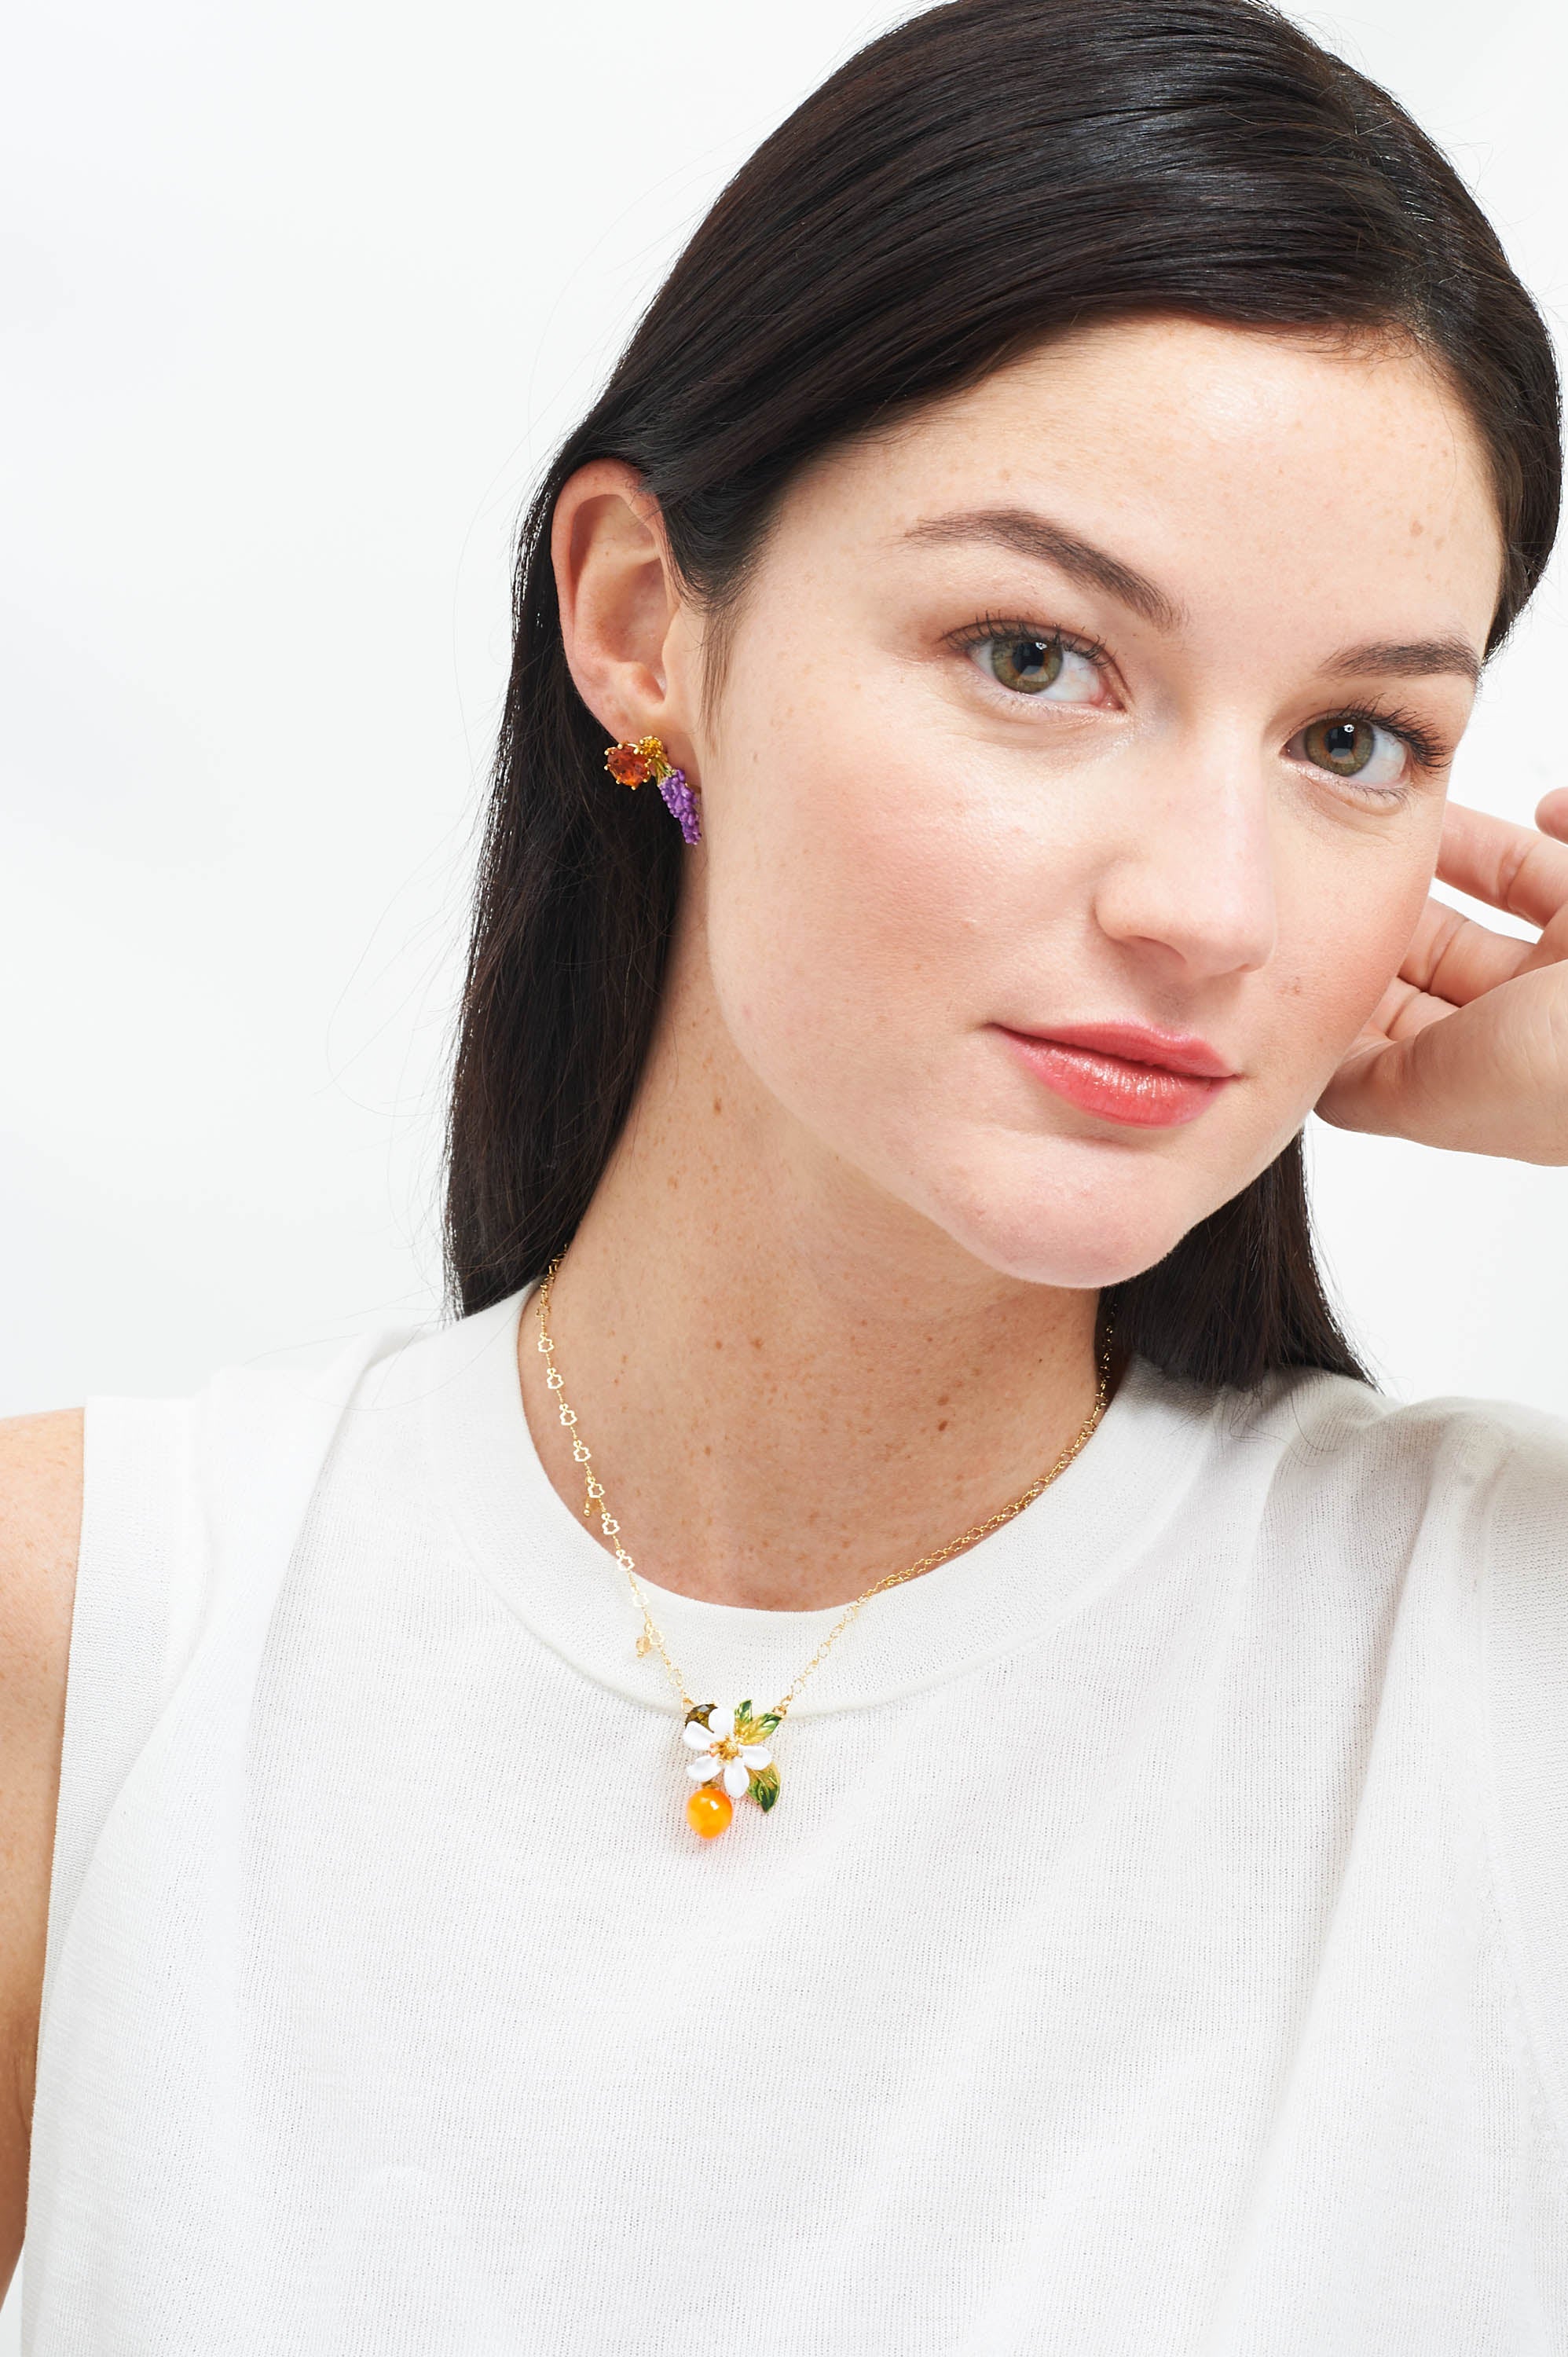 Orange, orange blossom and little pearls pendant necklace